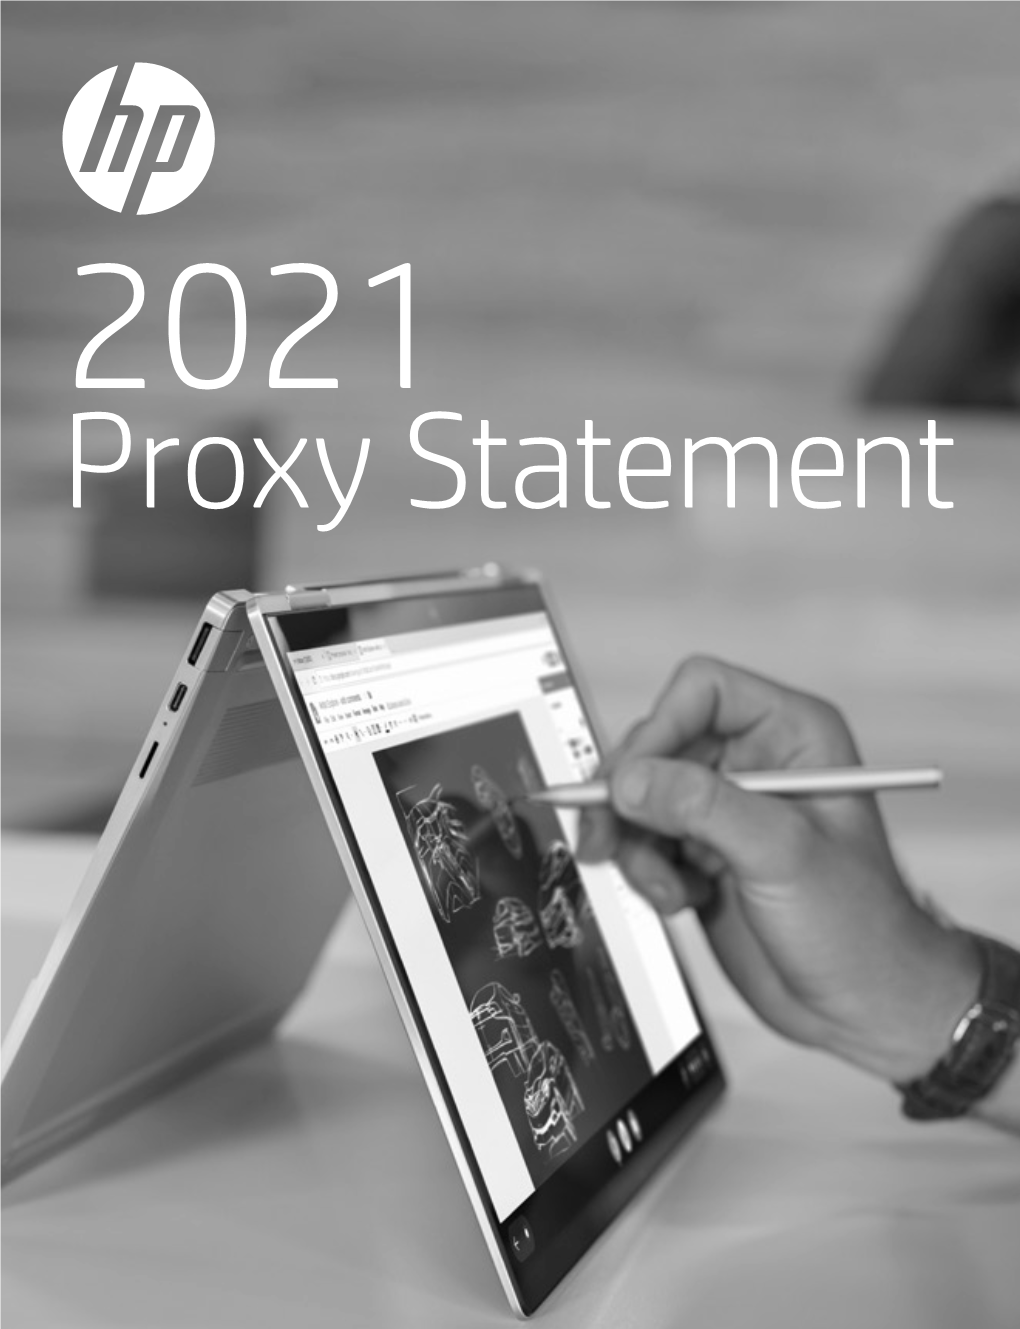 HP 2021 Proxy Statement